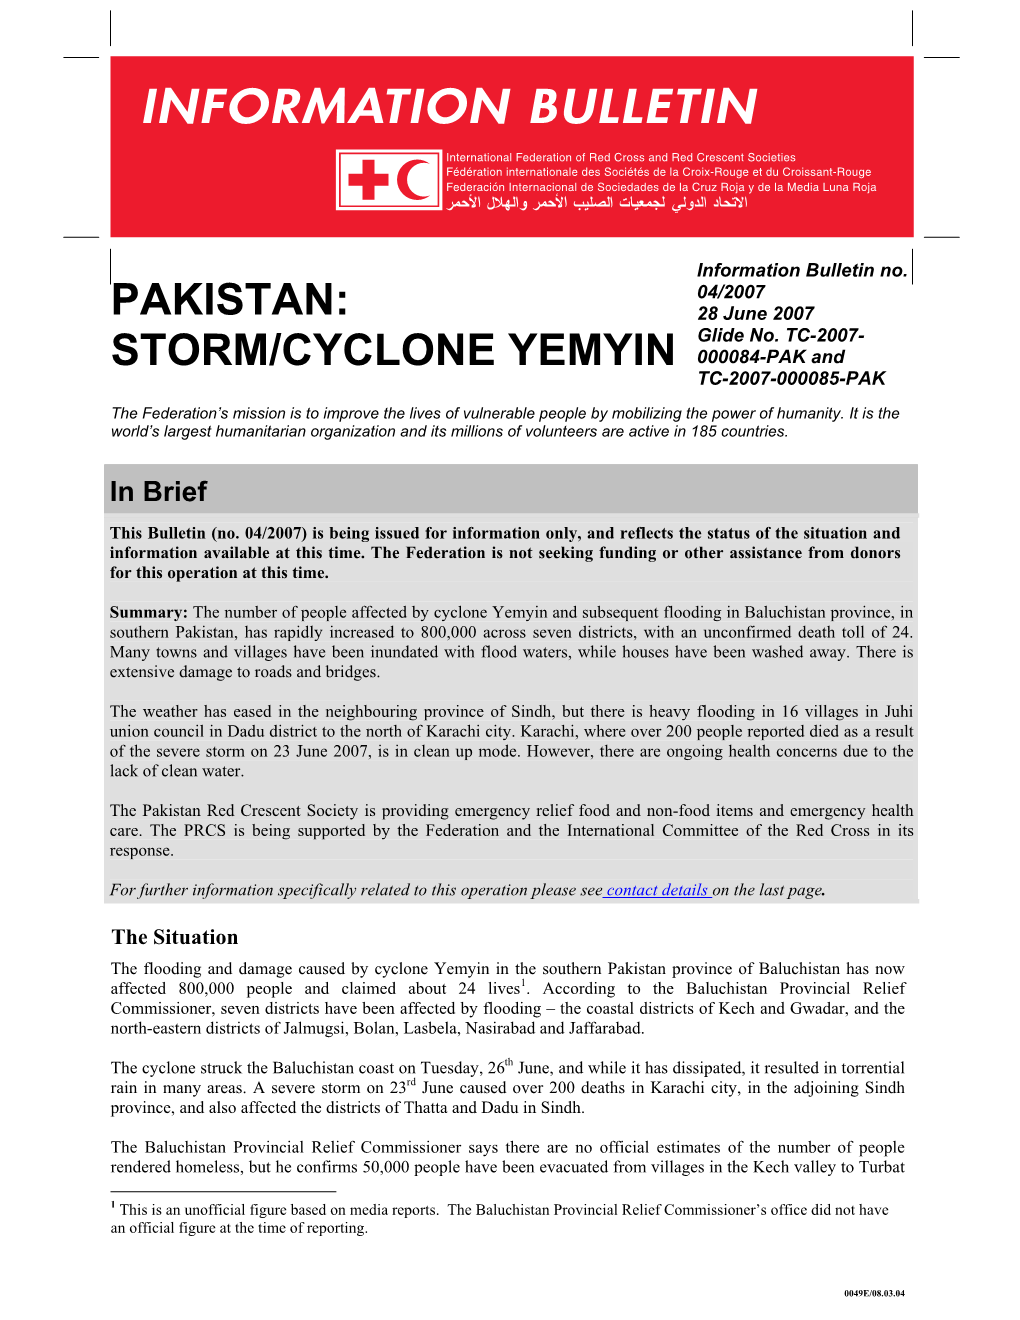 Pakistan: Storm/Cyclone Yemyin; Information Bulletin No